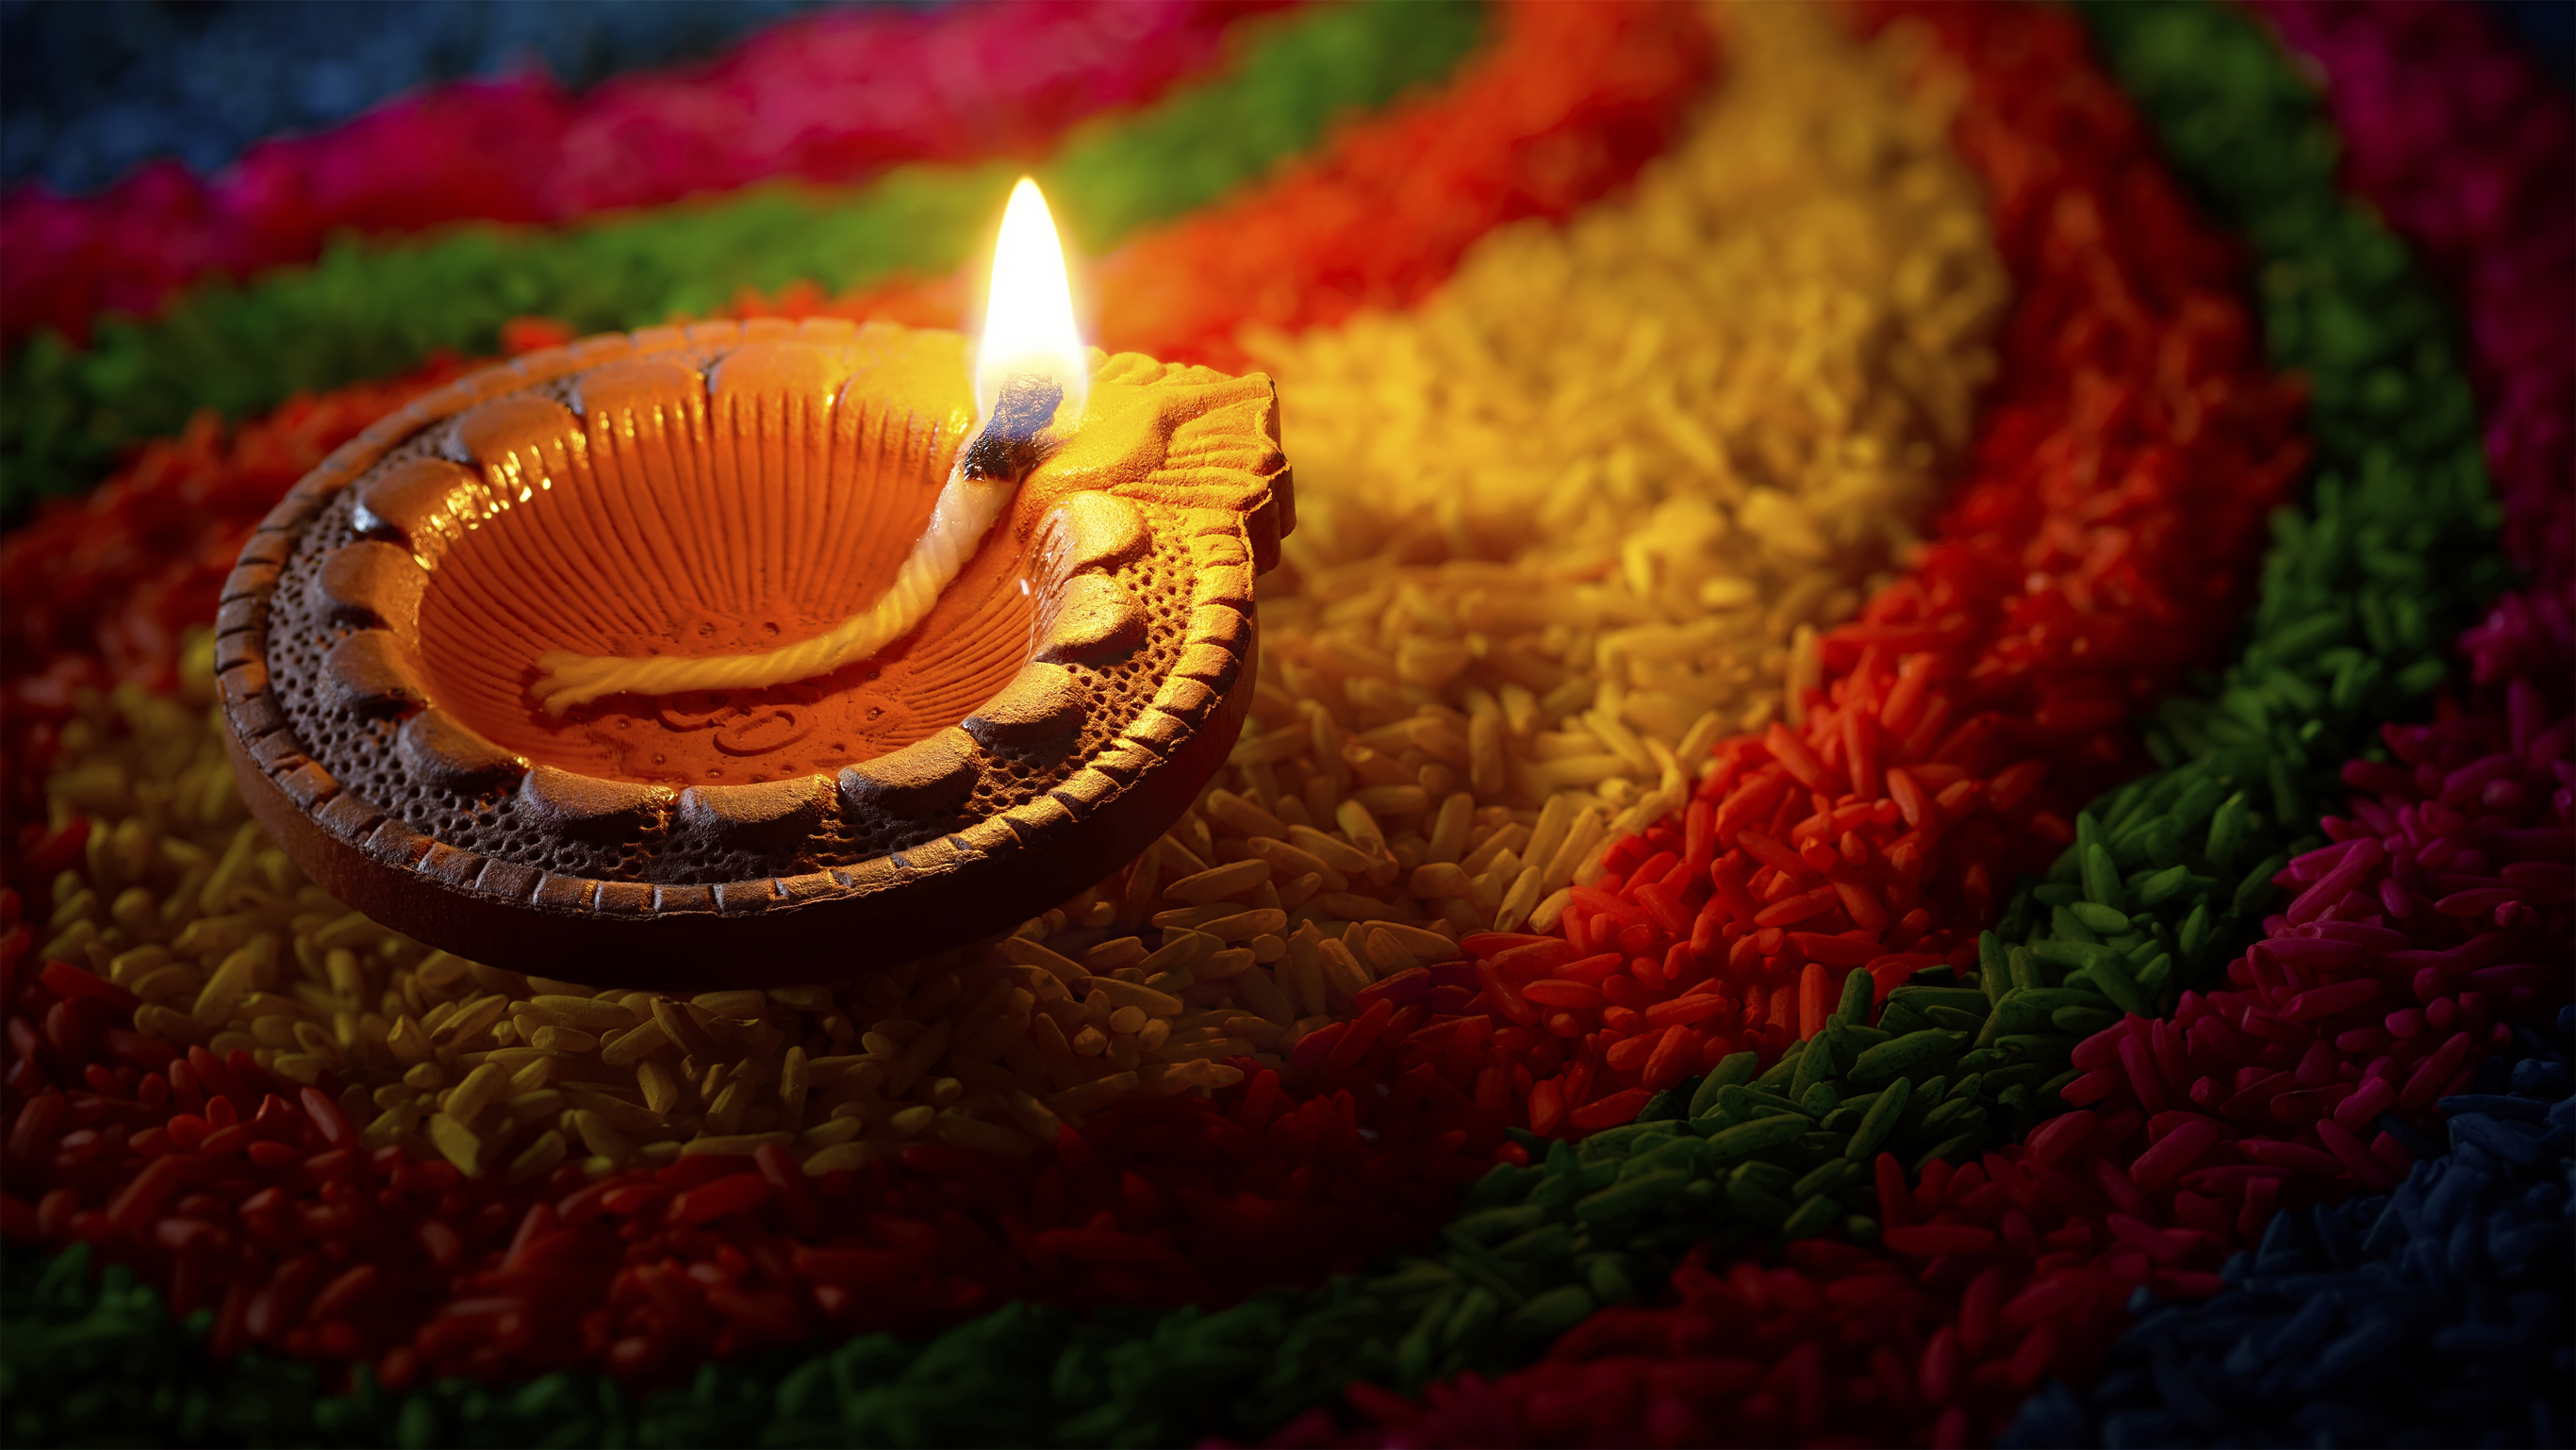 Religious Diwali HD Wallpaper | Background Image